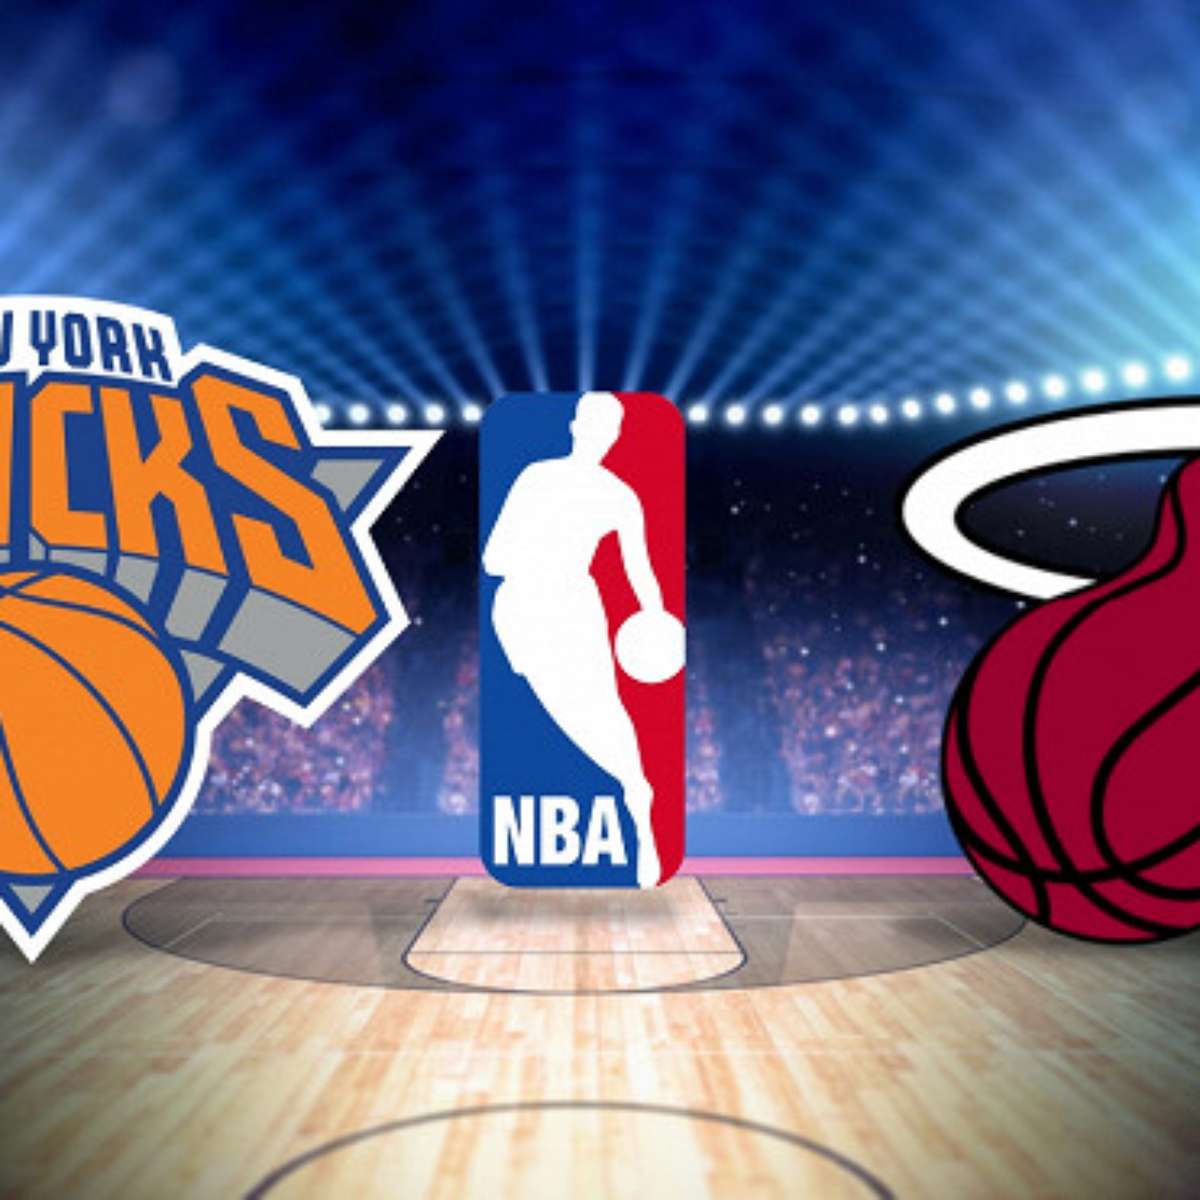 Miami Heat vence série contra os Knicks e está na final do Leste, nba